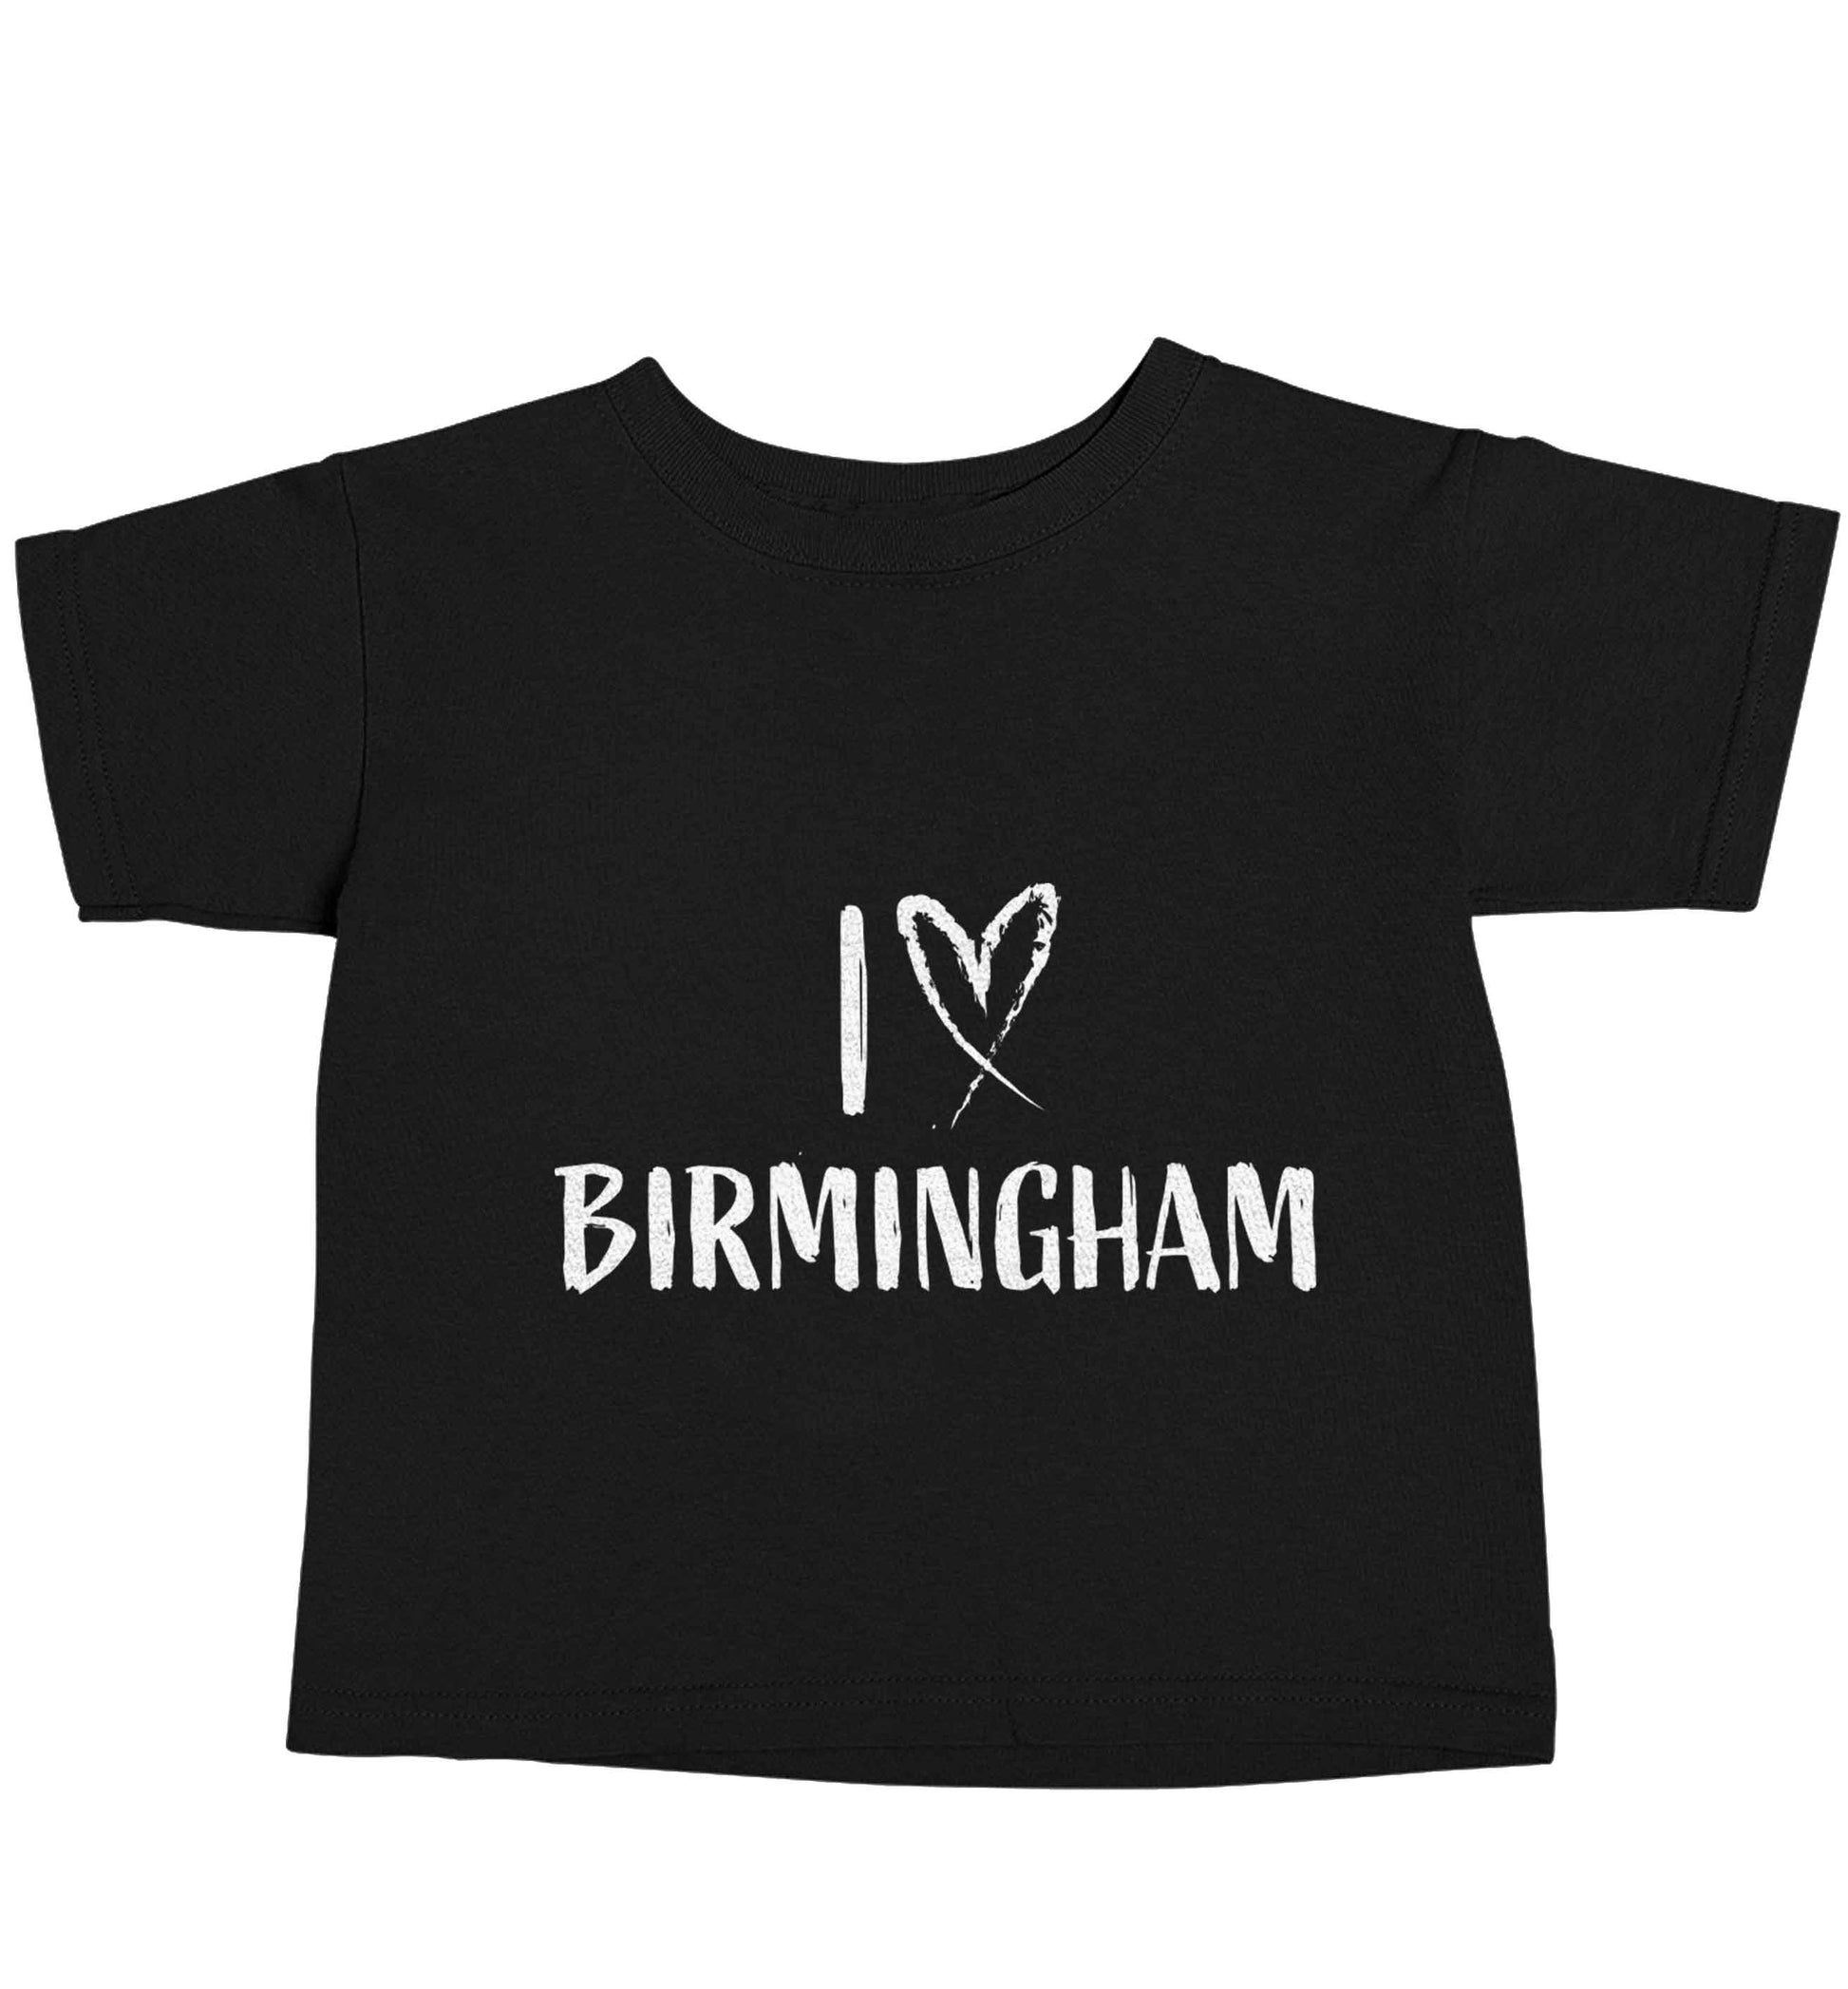 I love Birmingham Black baby toddler Tshirt 2 years